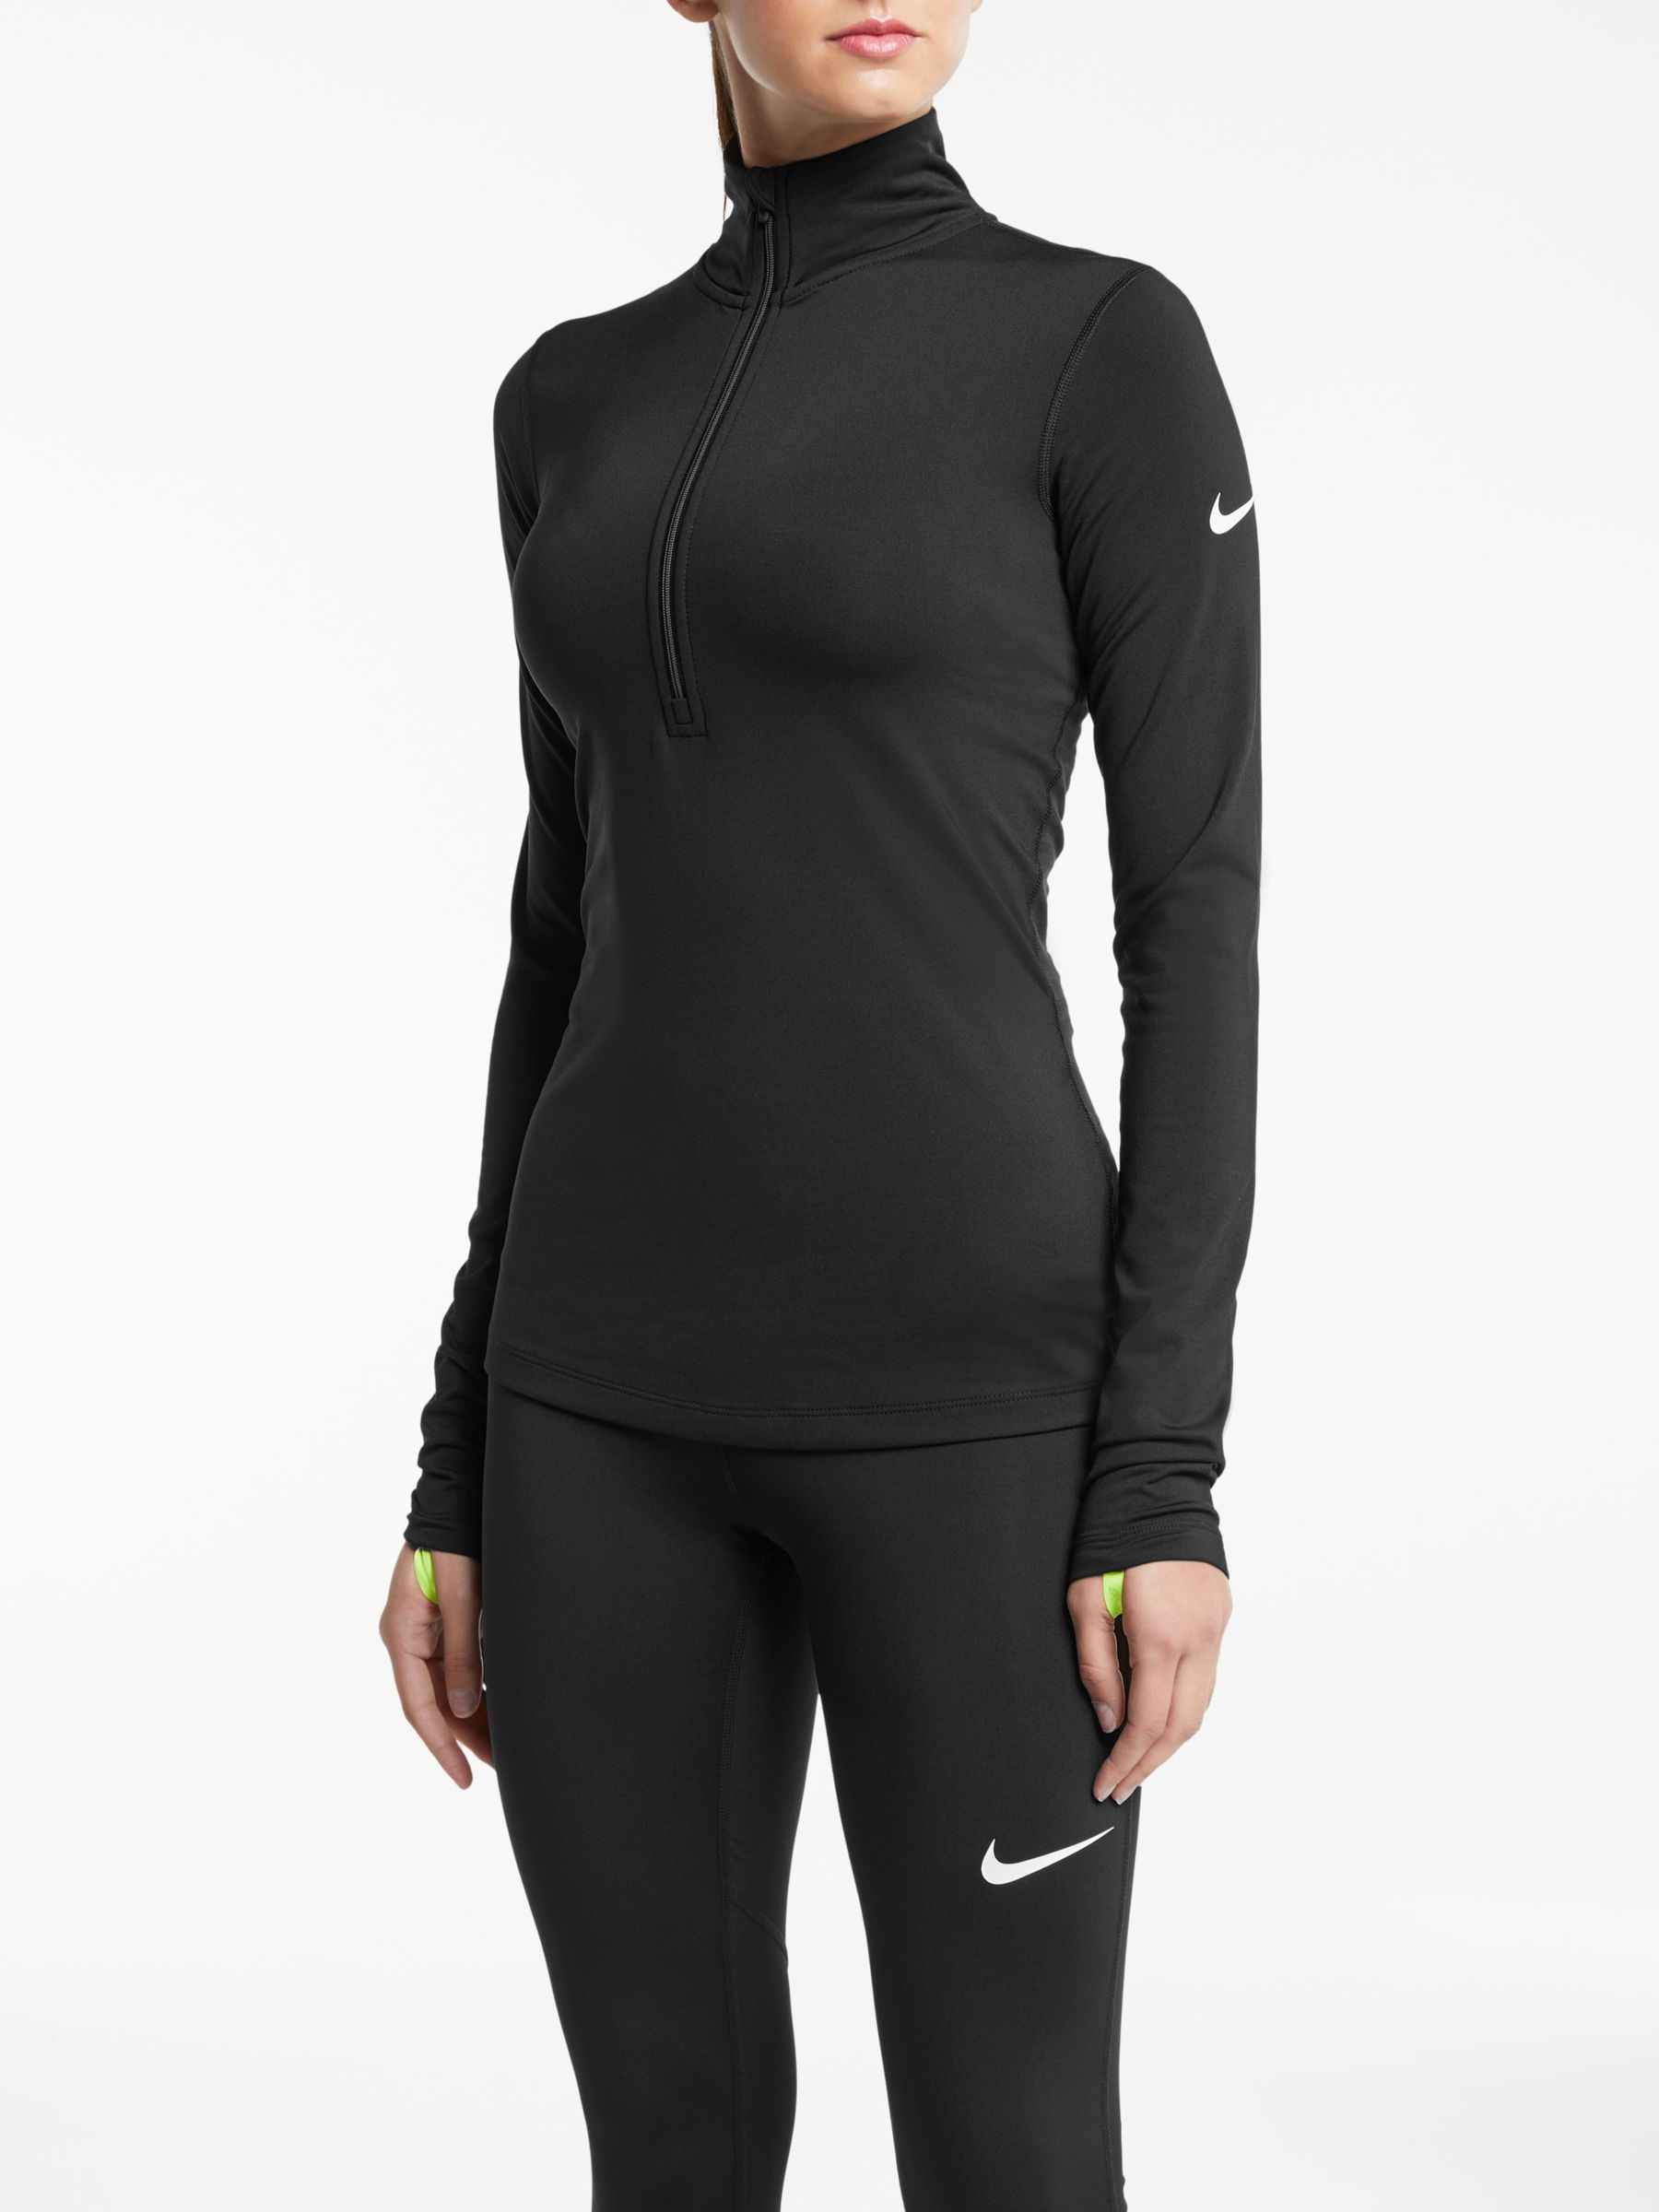 Nike Pro Training therma warm half zip top in black